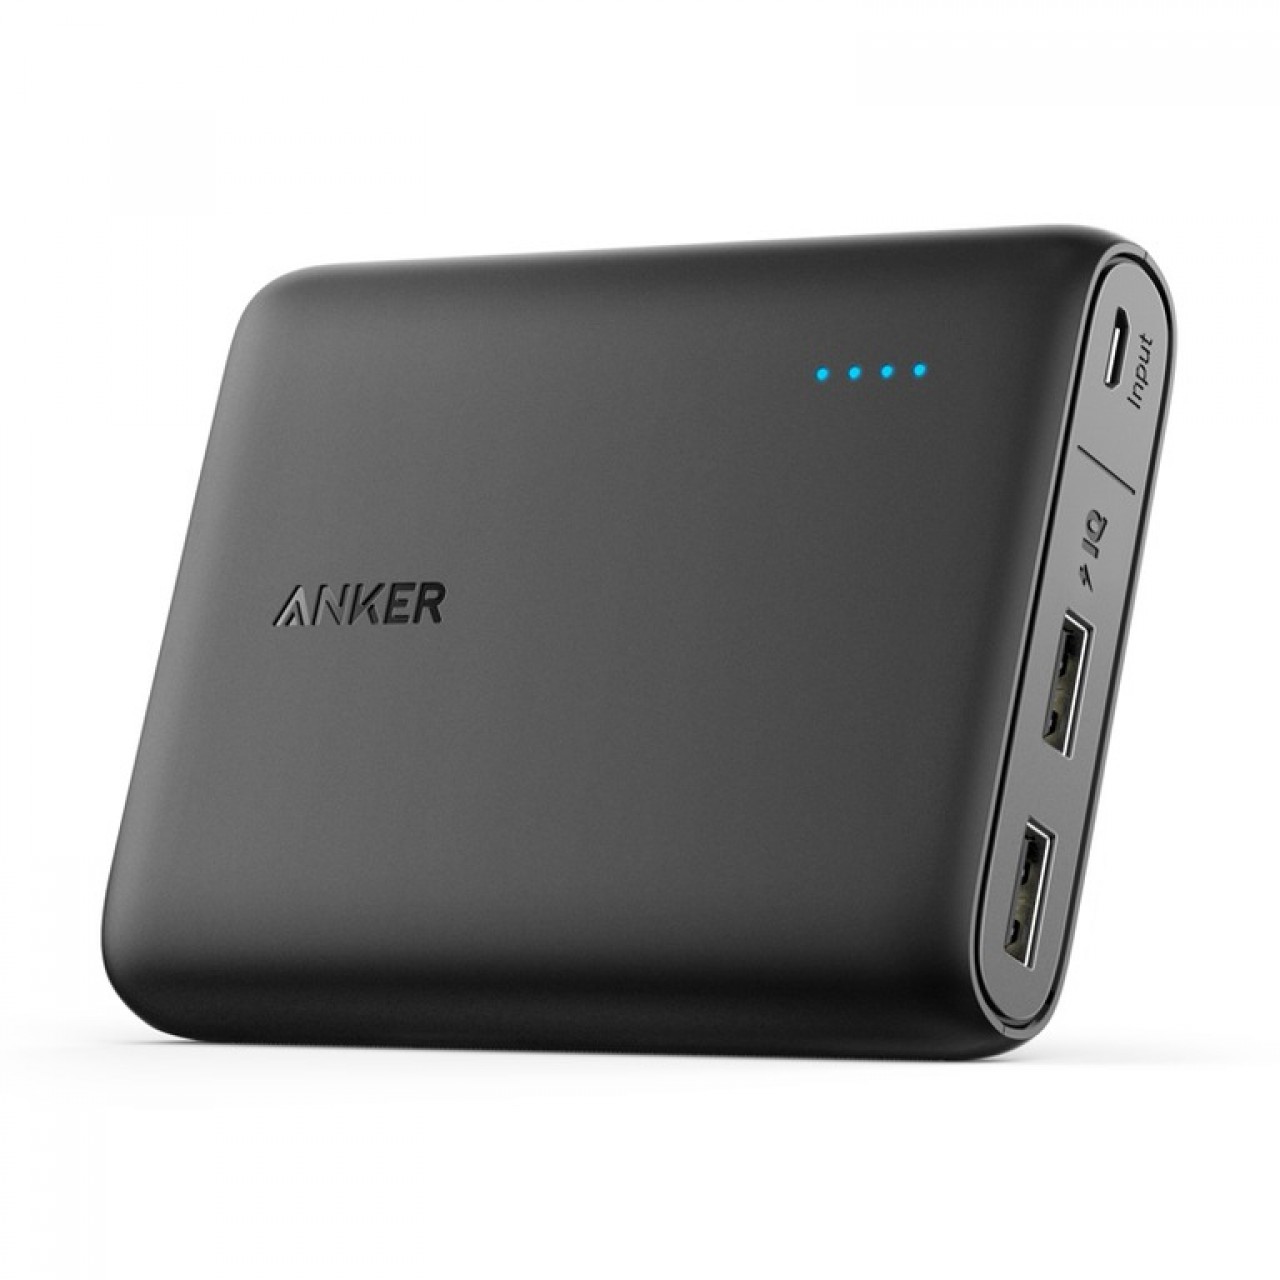 Anker Portable Power Bank 10400 mAh - PowerIQ For iPhone, iPad, & Samsung